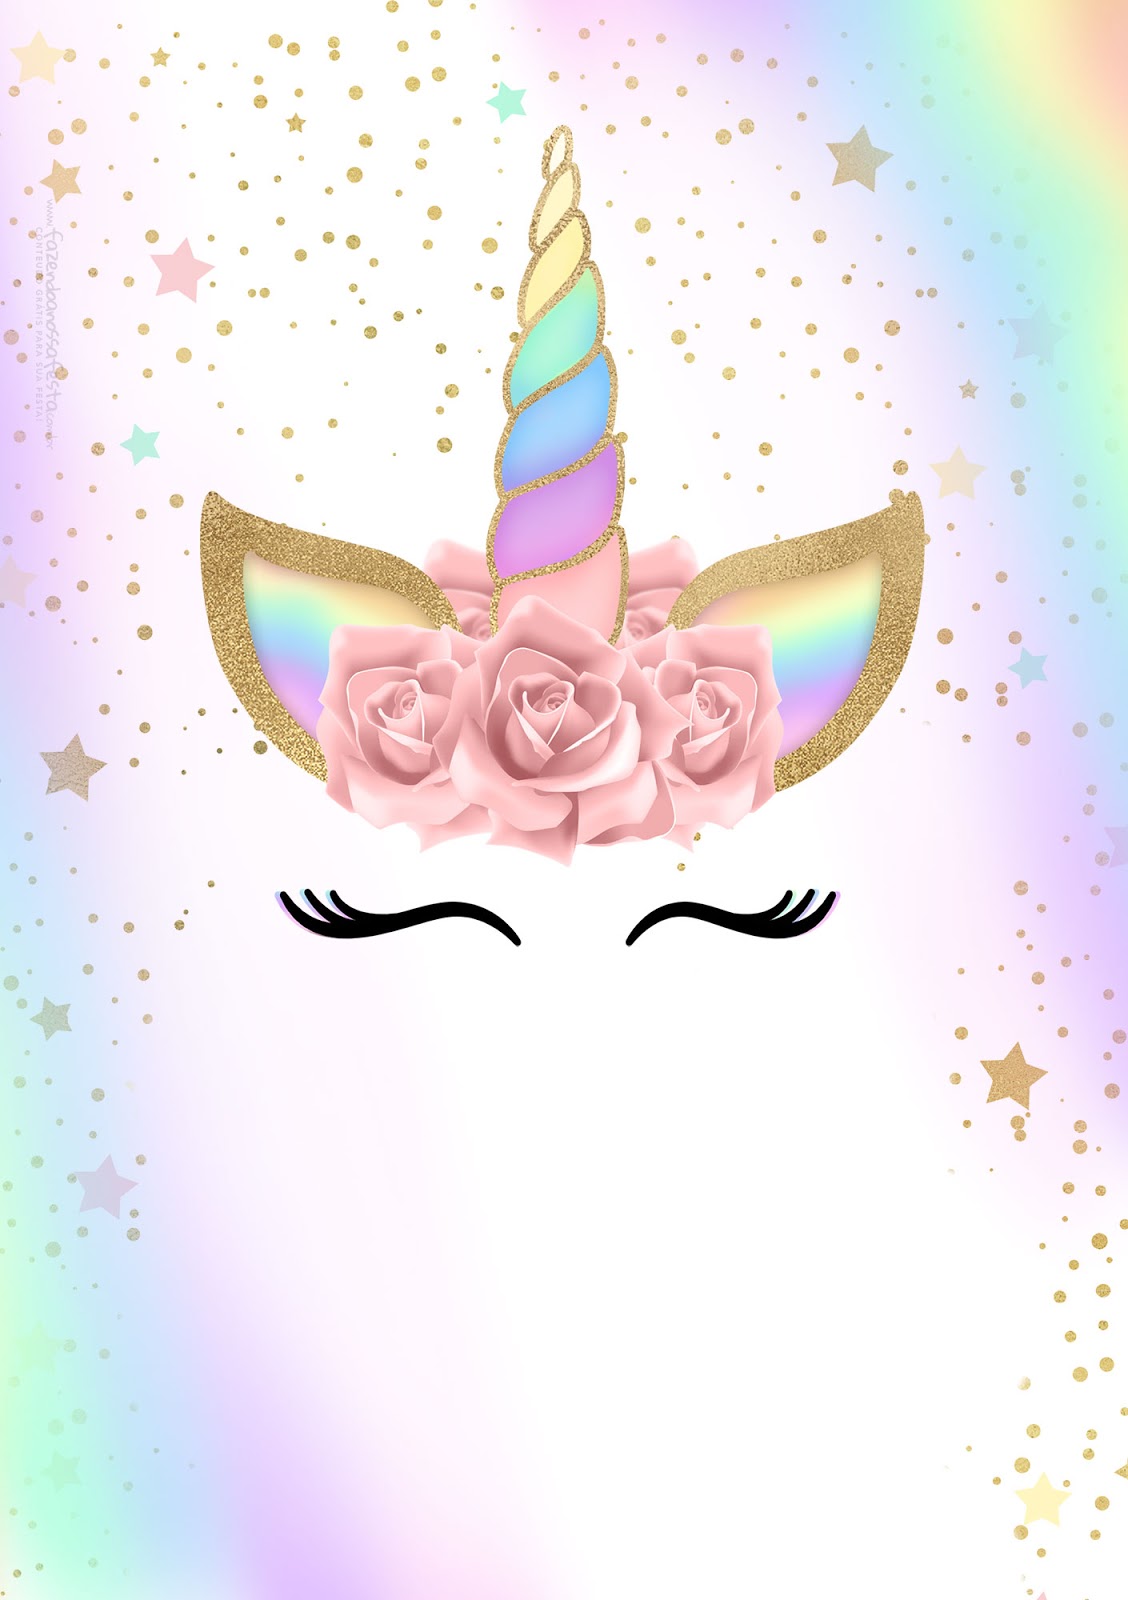 Unicorn with Rainbow: Free Printable Invitations. - Oh My Fiesta! in ...